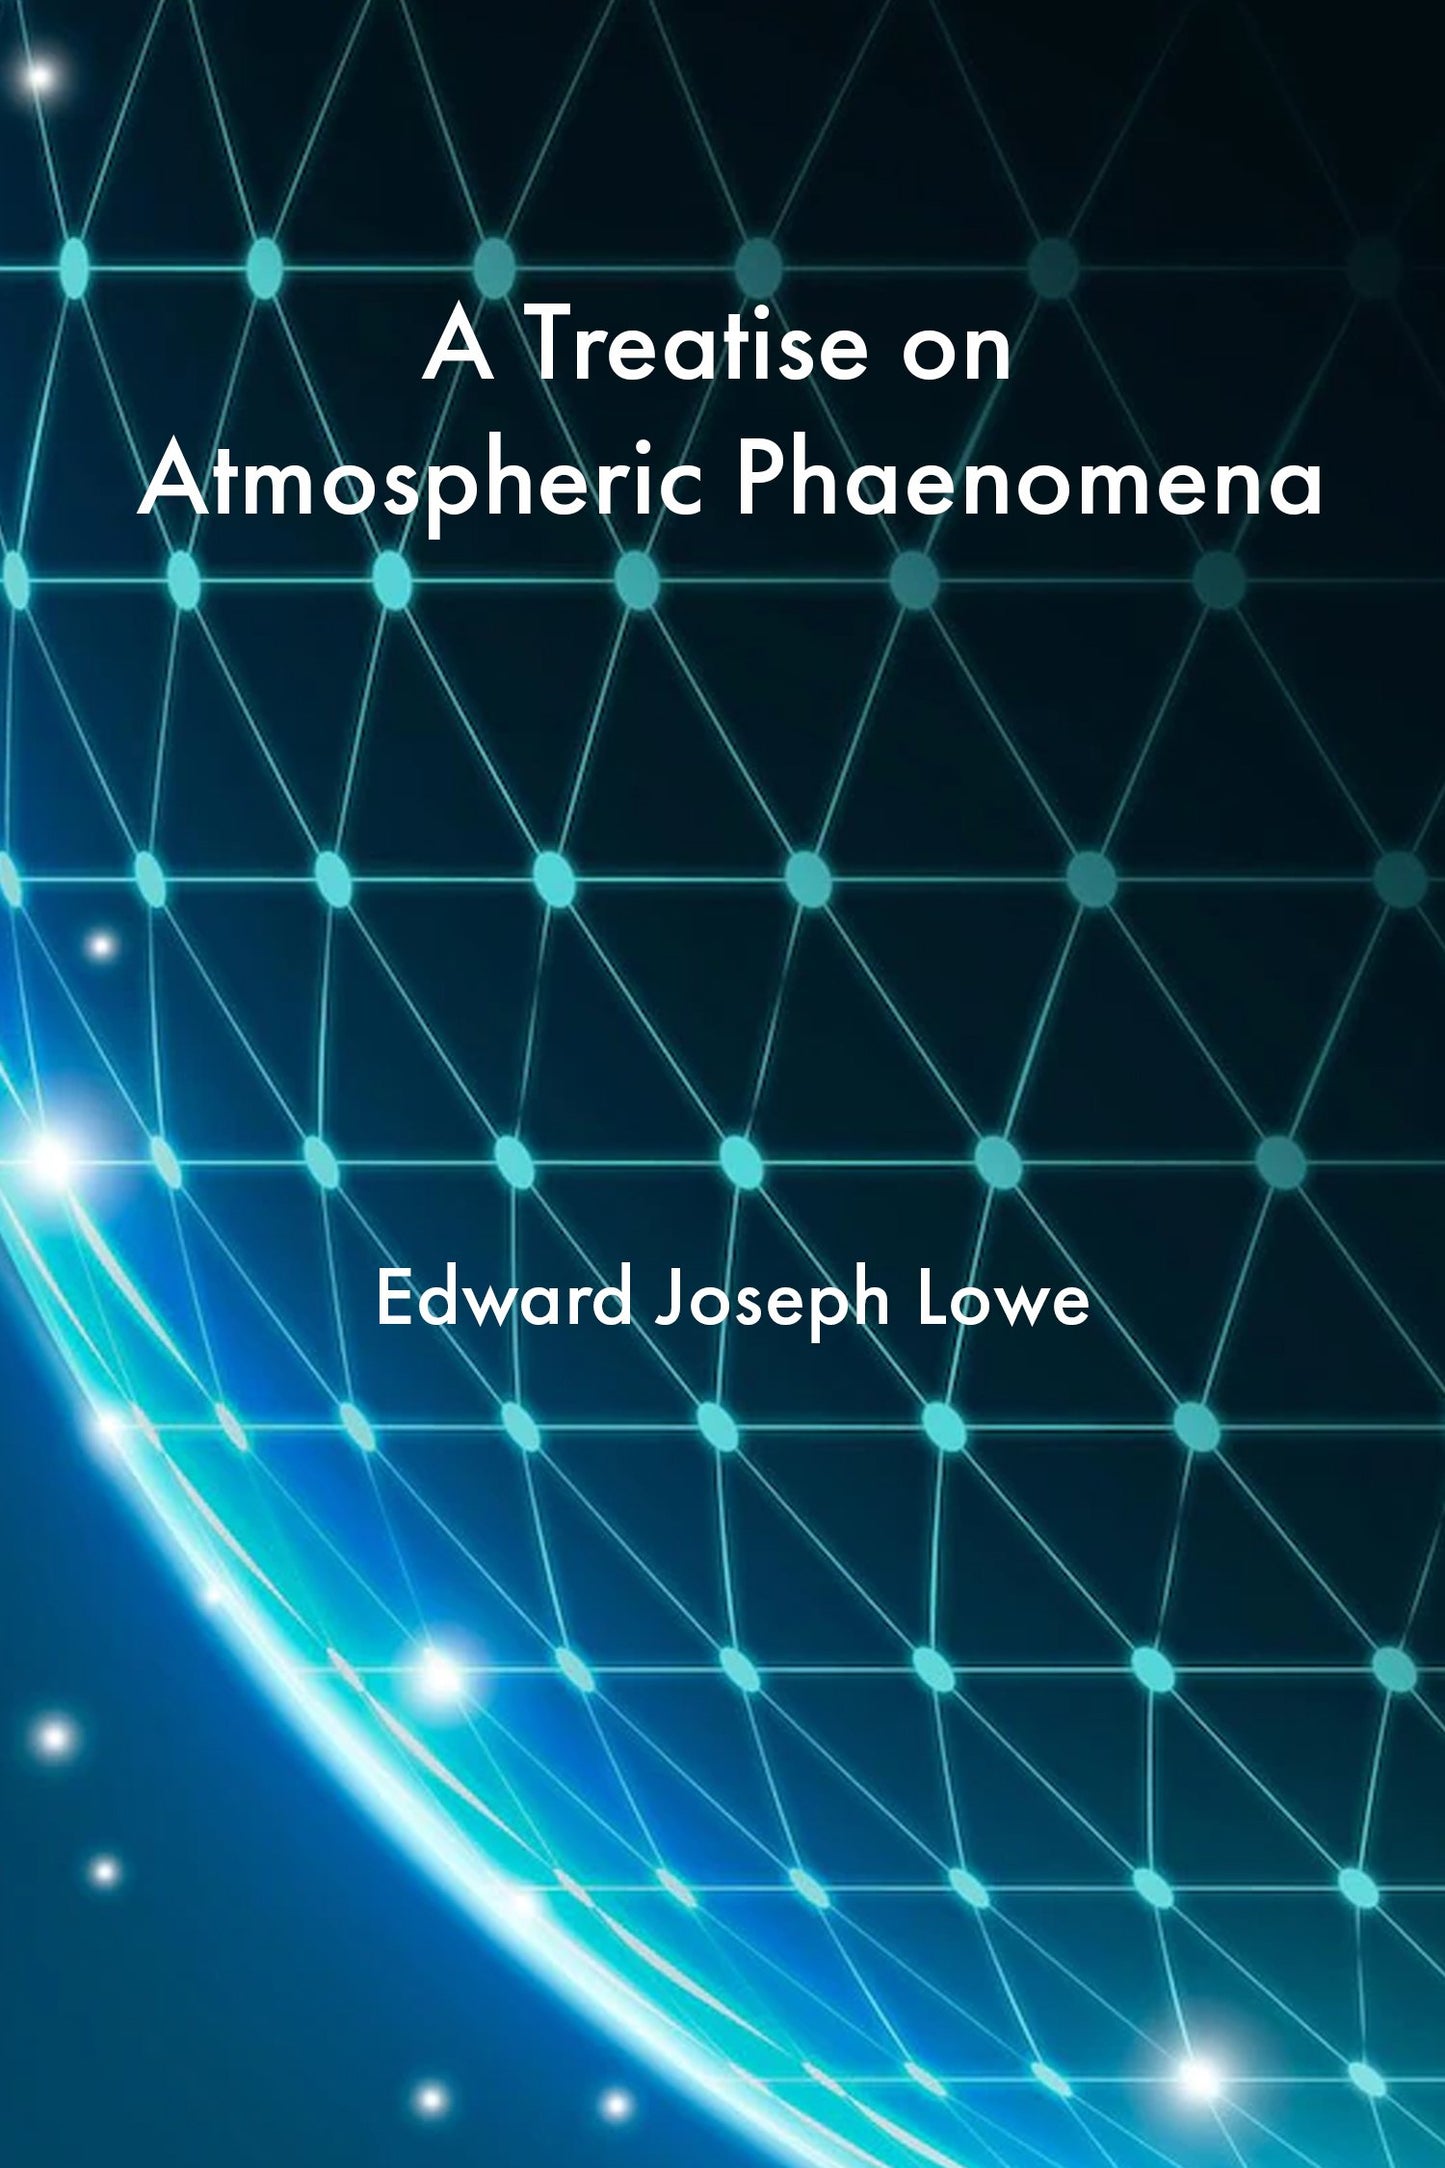 A Treatise on Atmospheric Phaenomena